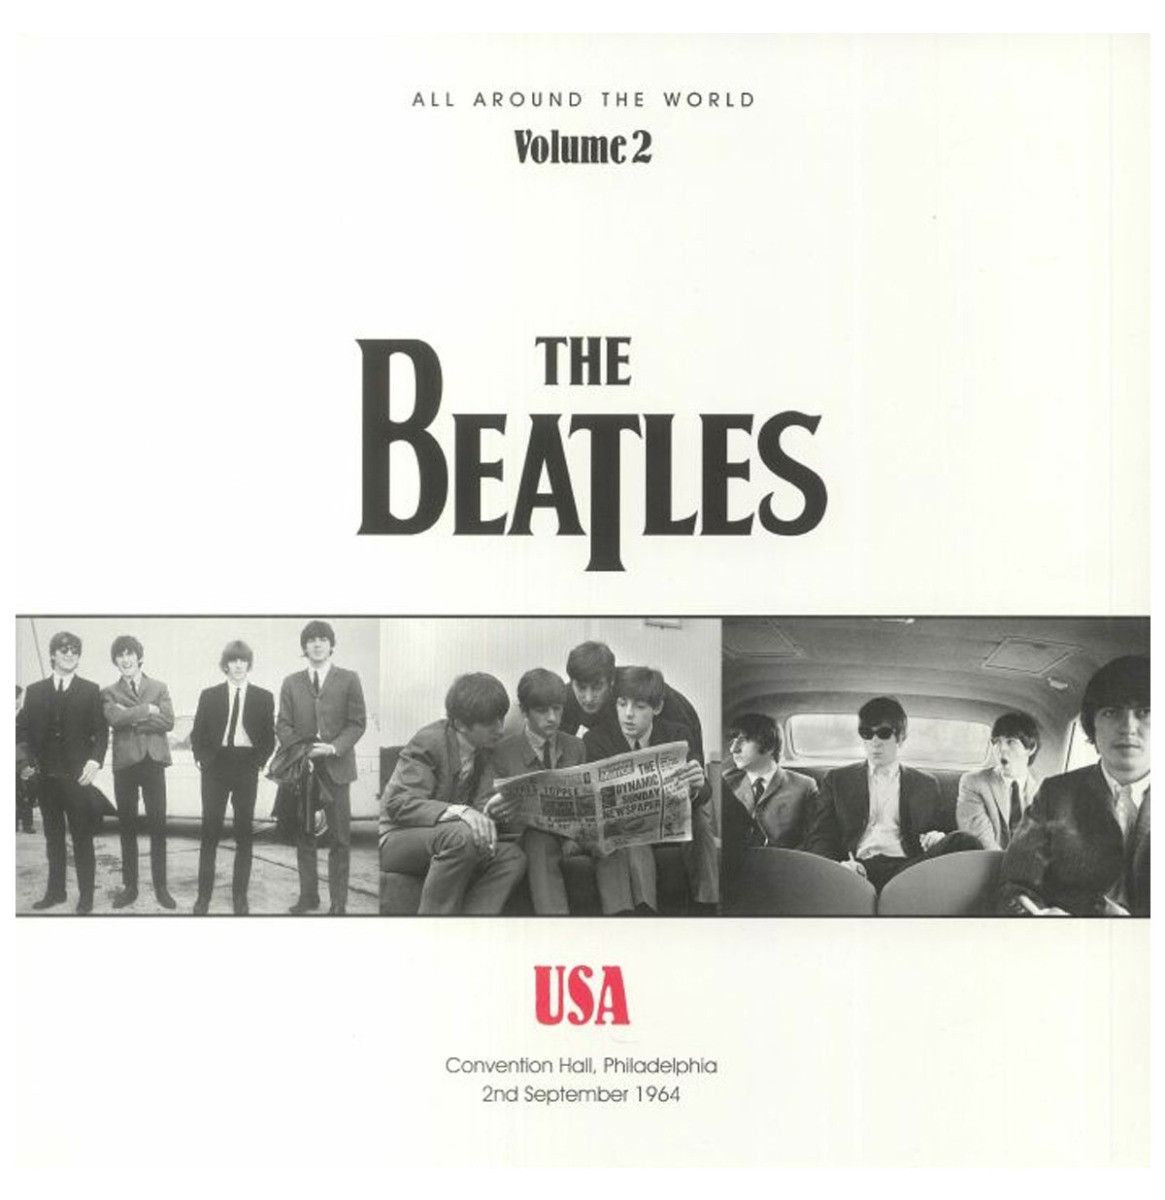 The Beatles - All Around The World Volume 2: USA 1964 LP